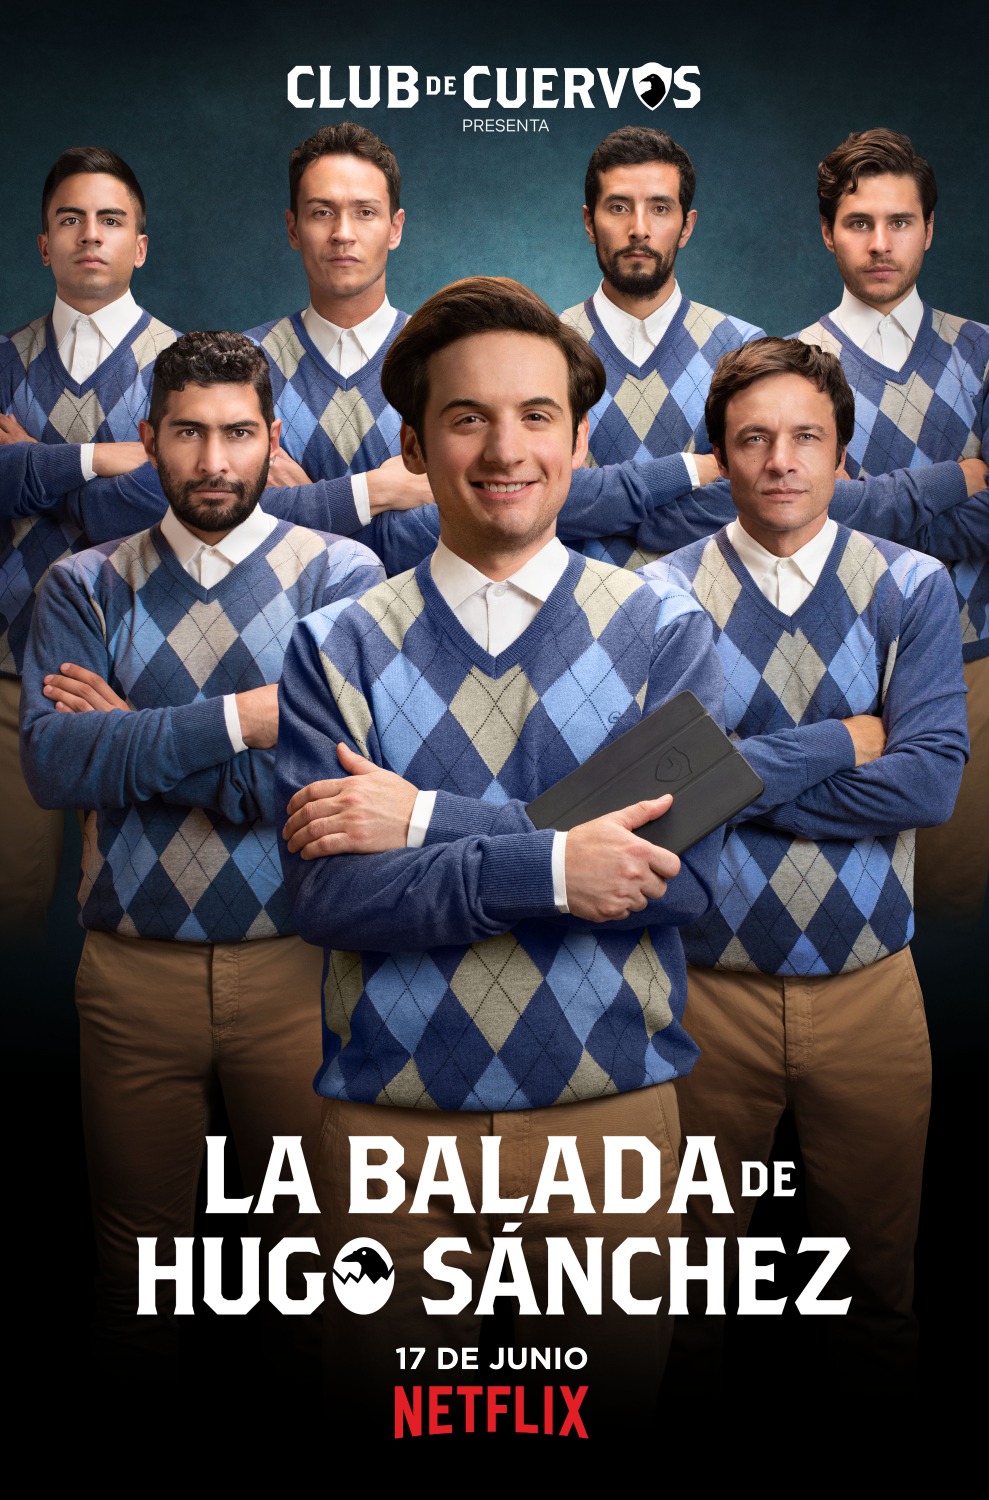 Extra Large TV Poster Image for La Balada de Hugo Sánchez (#1 of 2)